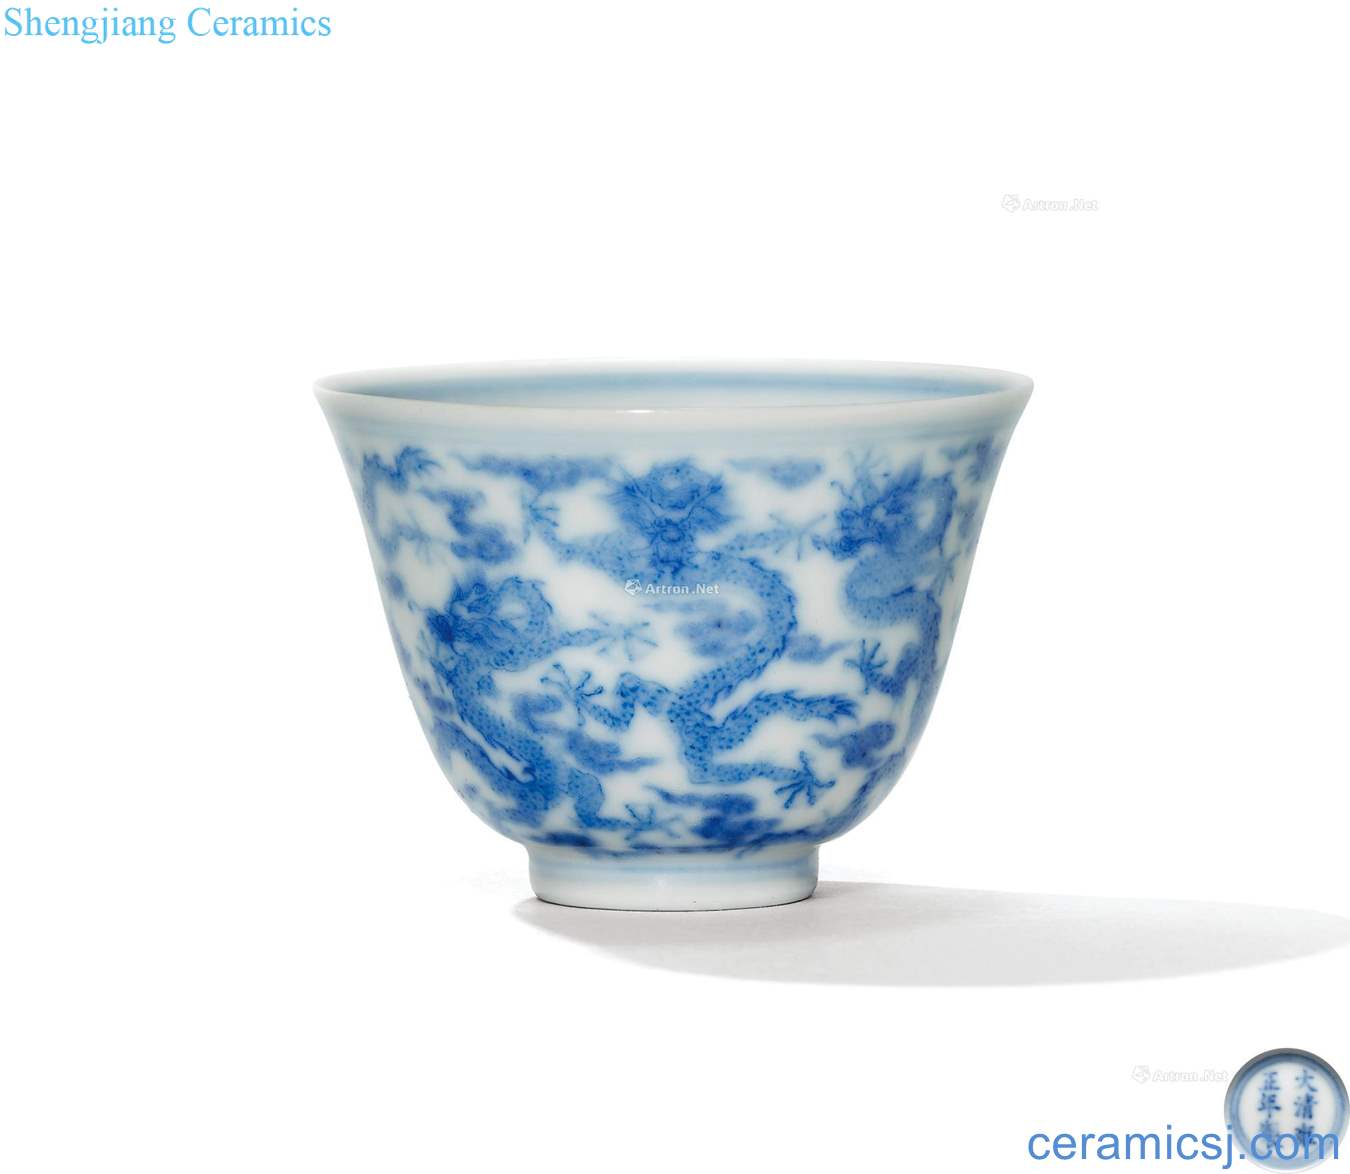 Qing yongzheng double circle blue and white pattern glass, Kowloon